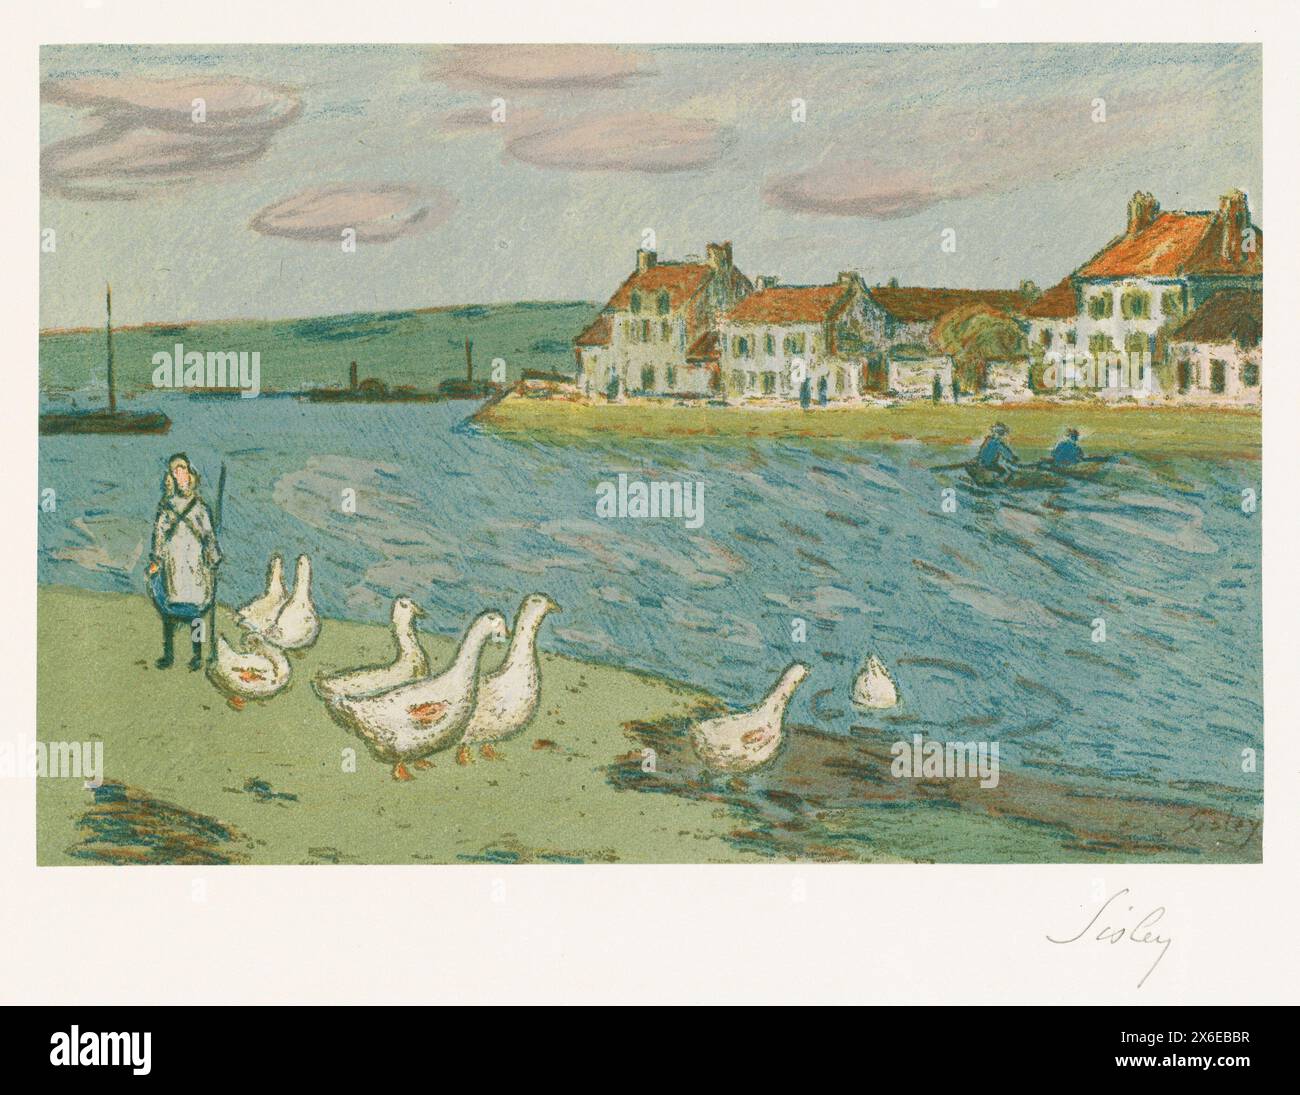 Banks of the River (Les Bords de rivière). Alfred Sisley. 1897. Color lithograph on wove paper. Stock Photo